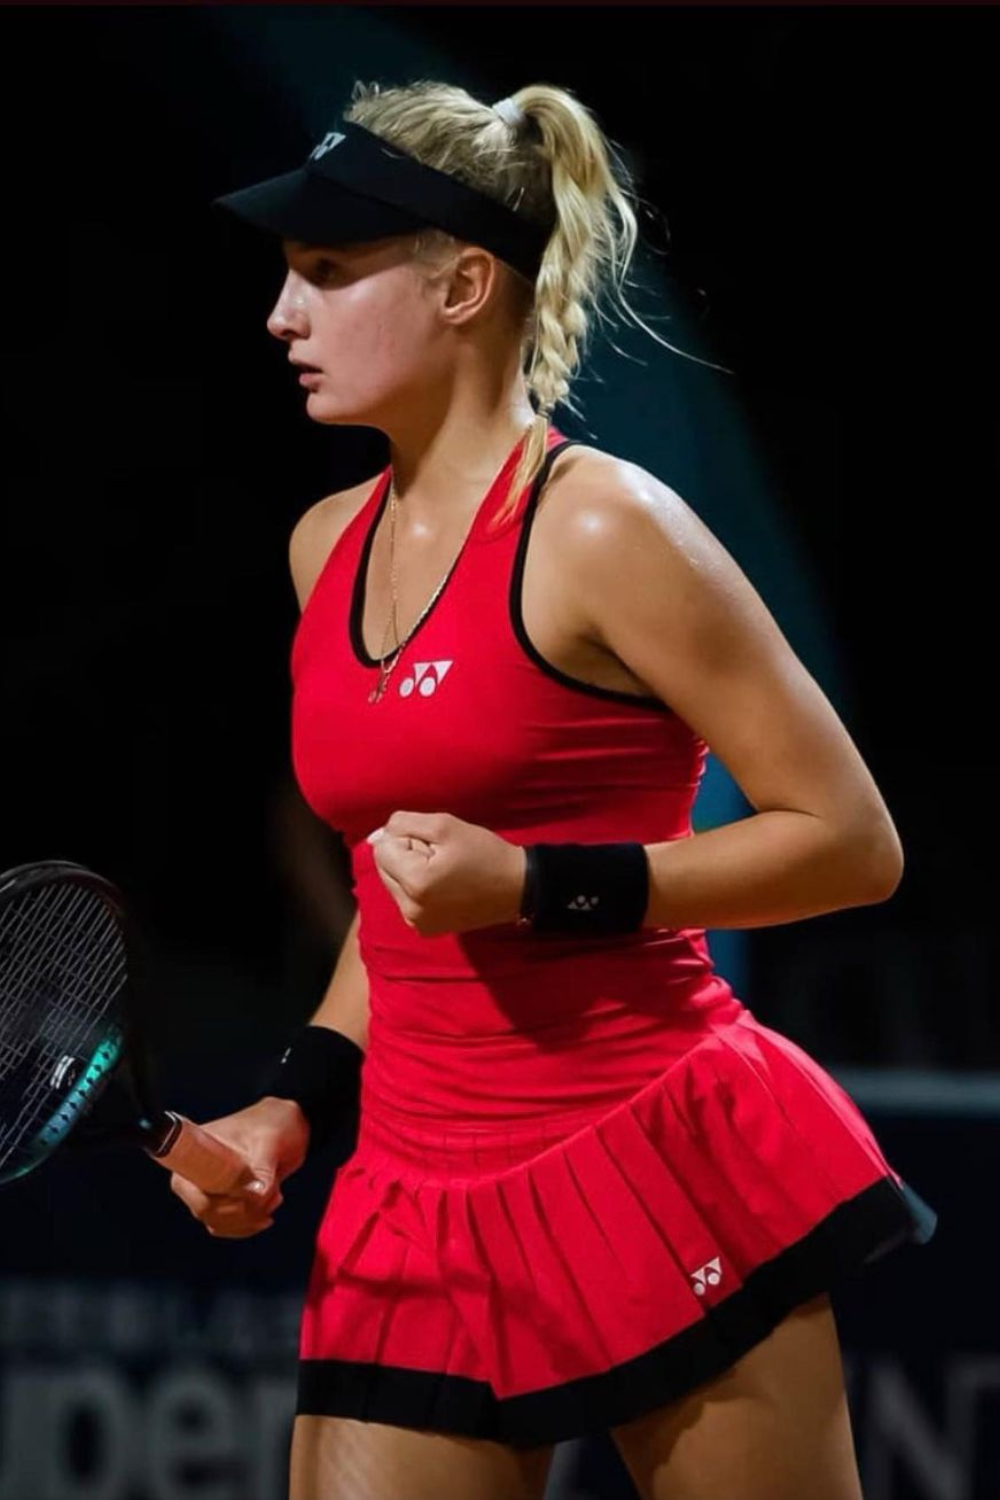 Dayana Yastremska Is A Ukrainian Professional Tennis Player